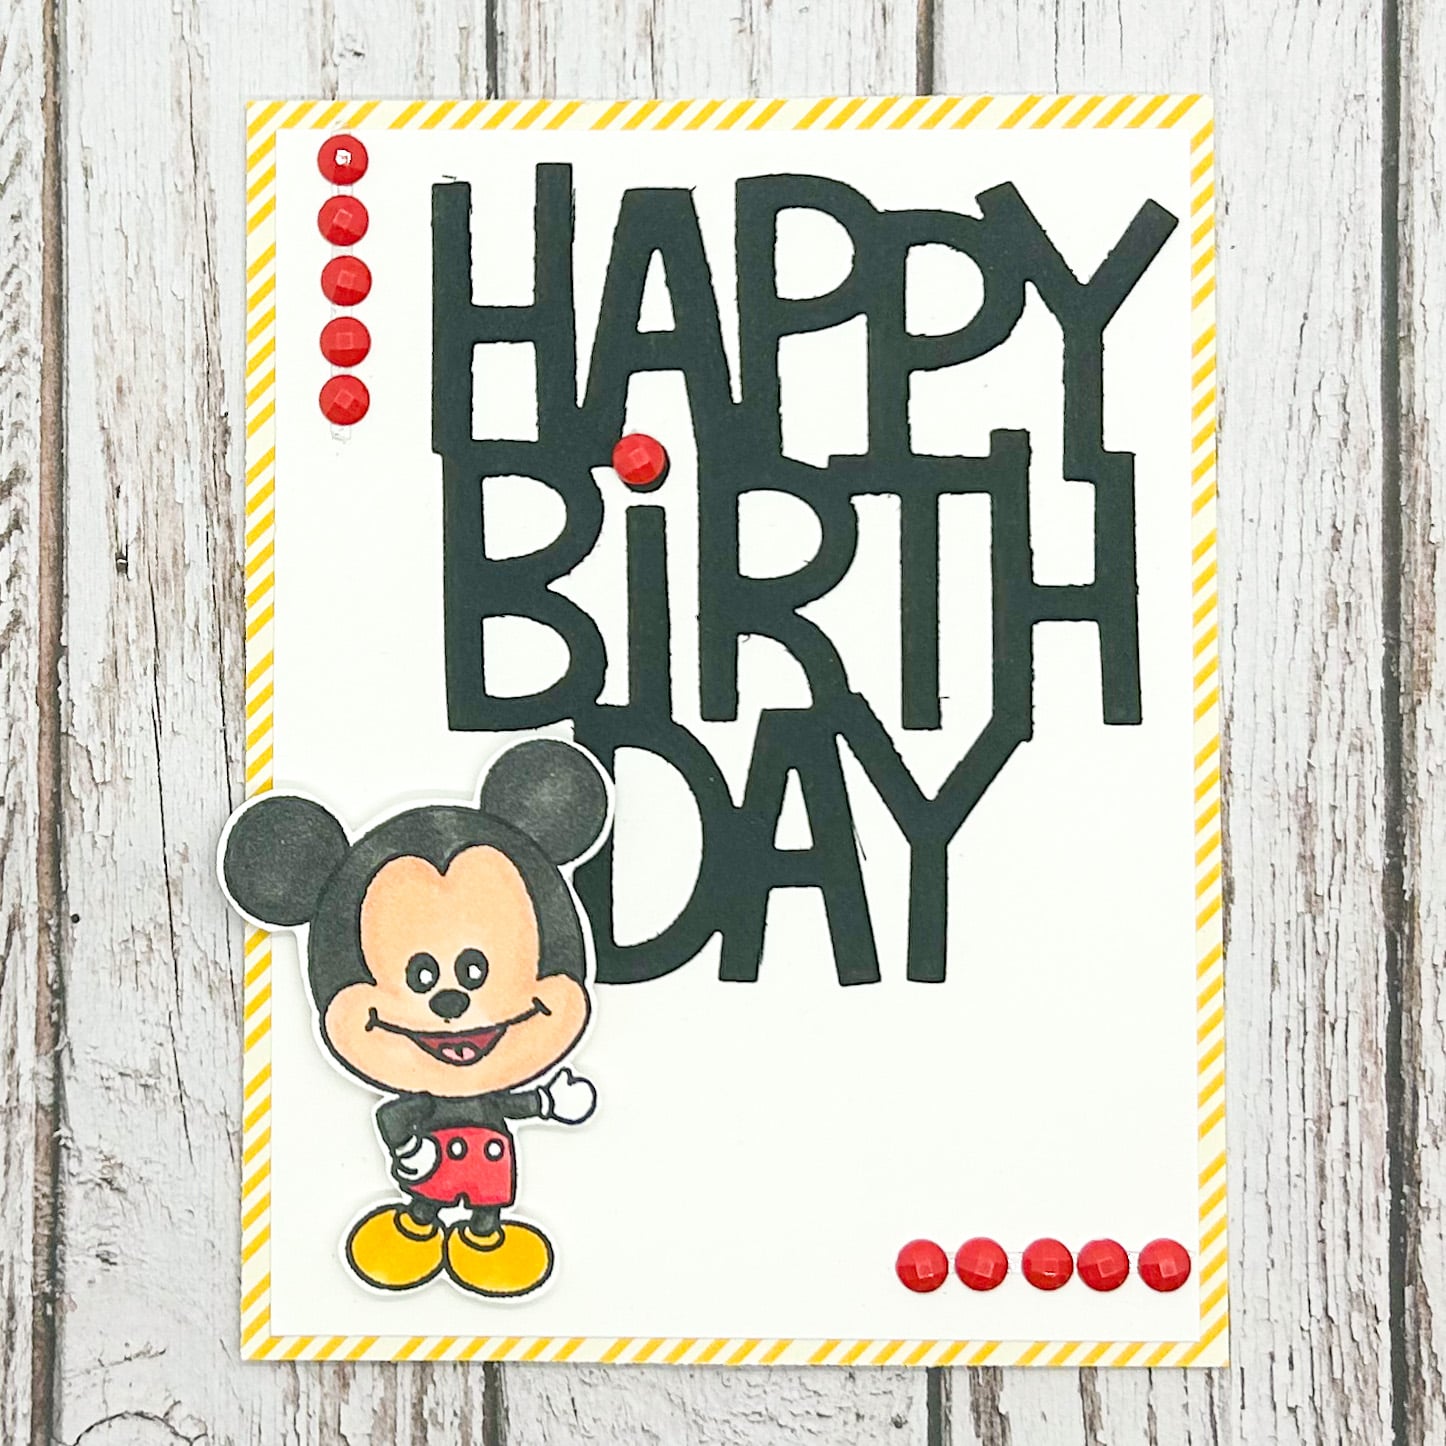 Boy Mouse Character Themed Handmade Birthday Card